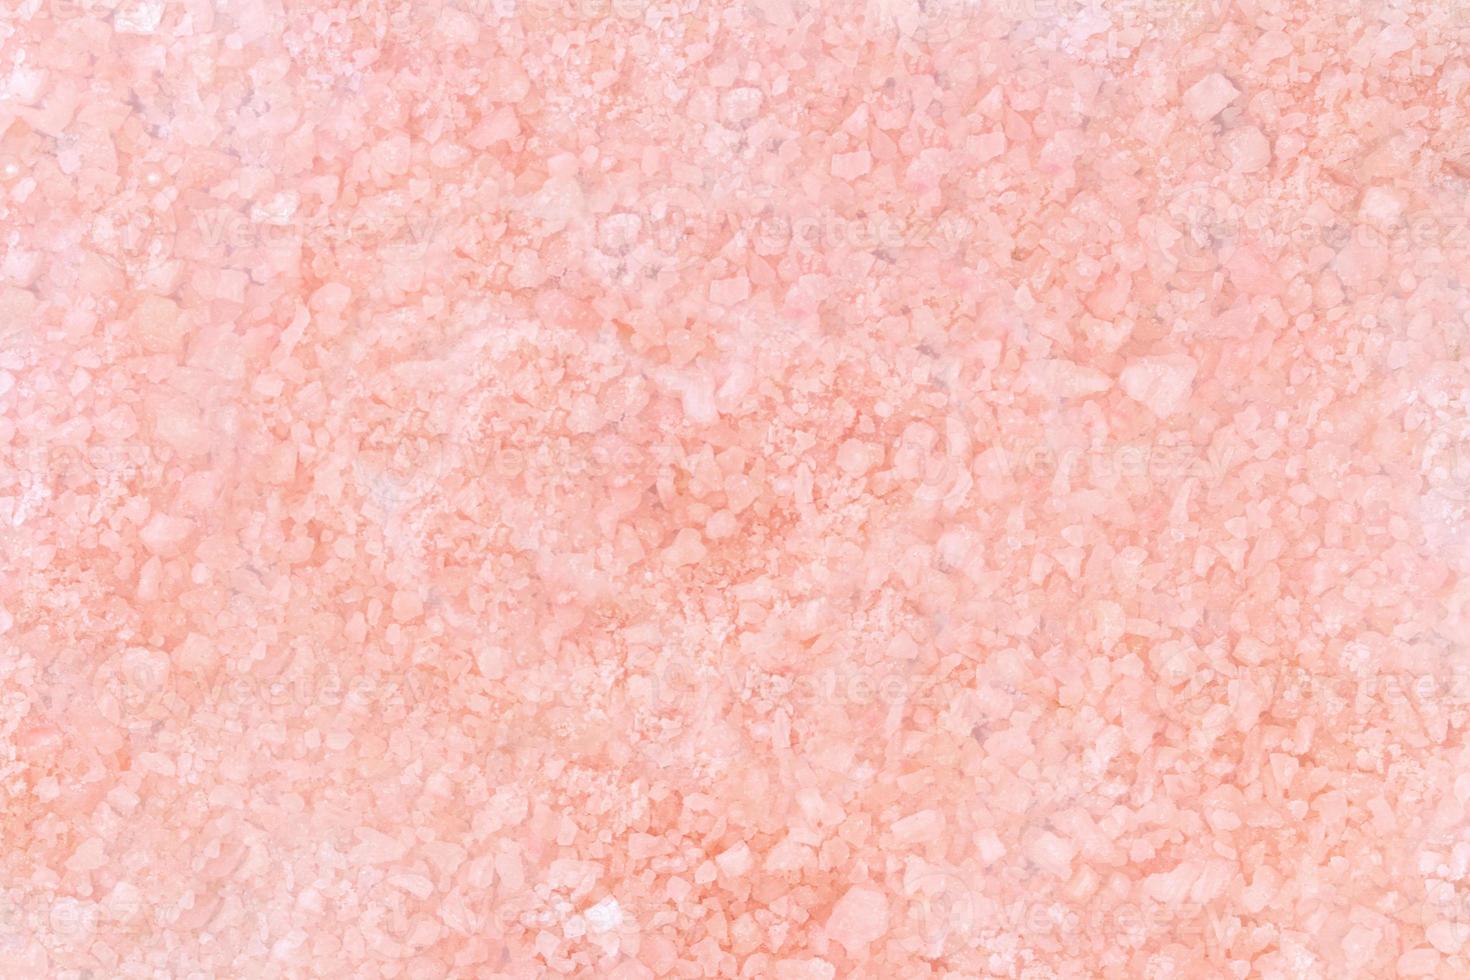 fondo rosa beige. sal marina. textura. fondo de spa foto